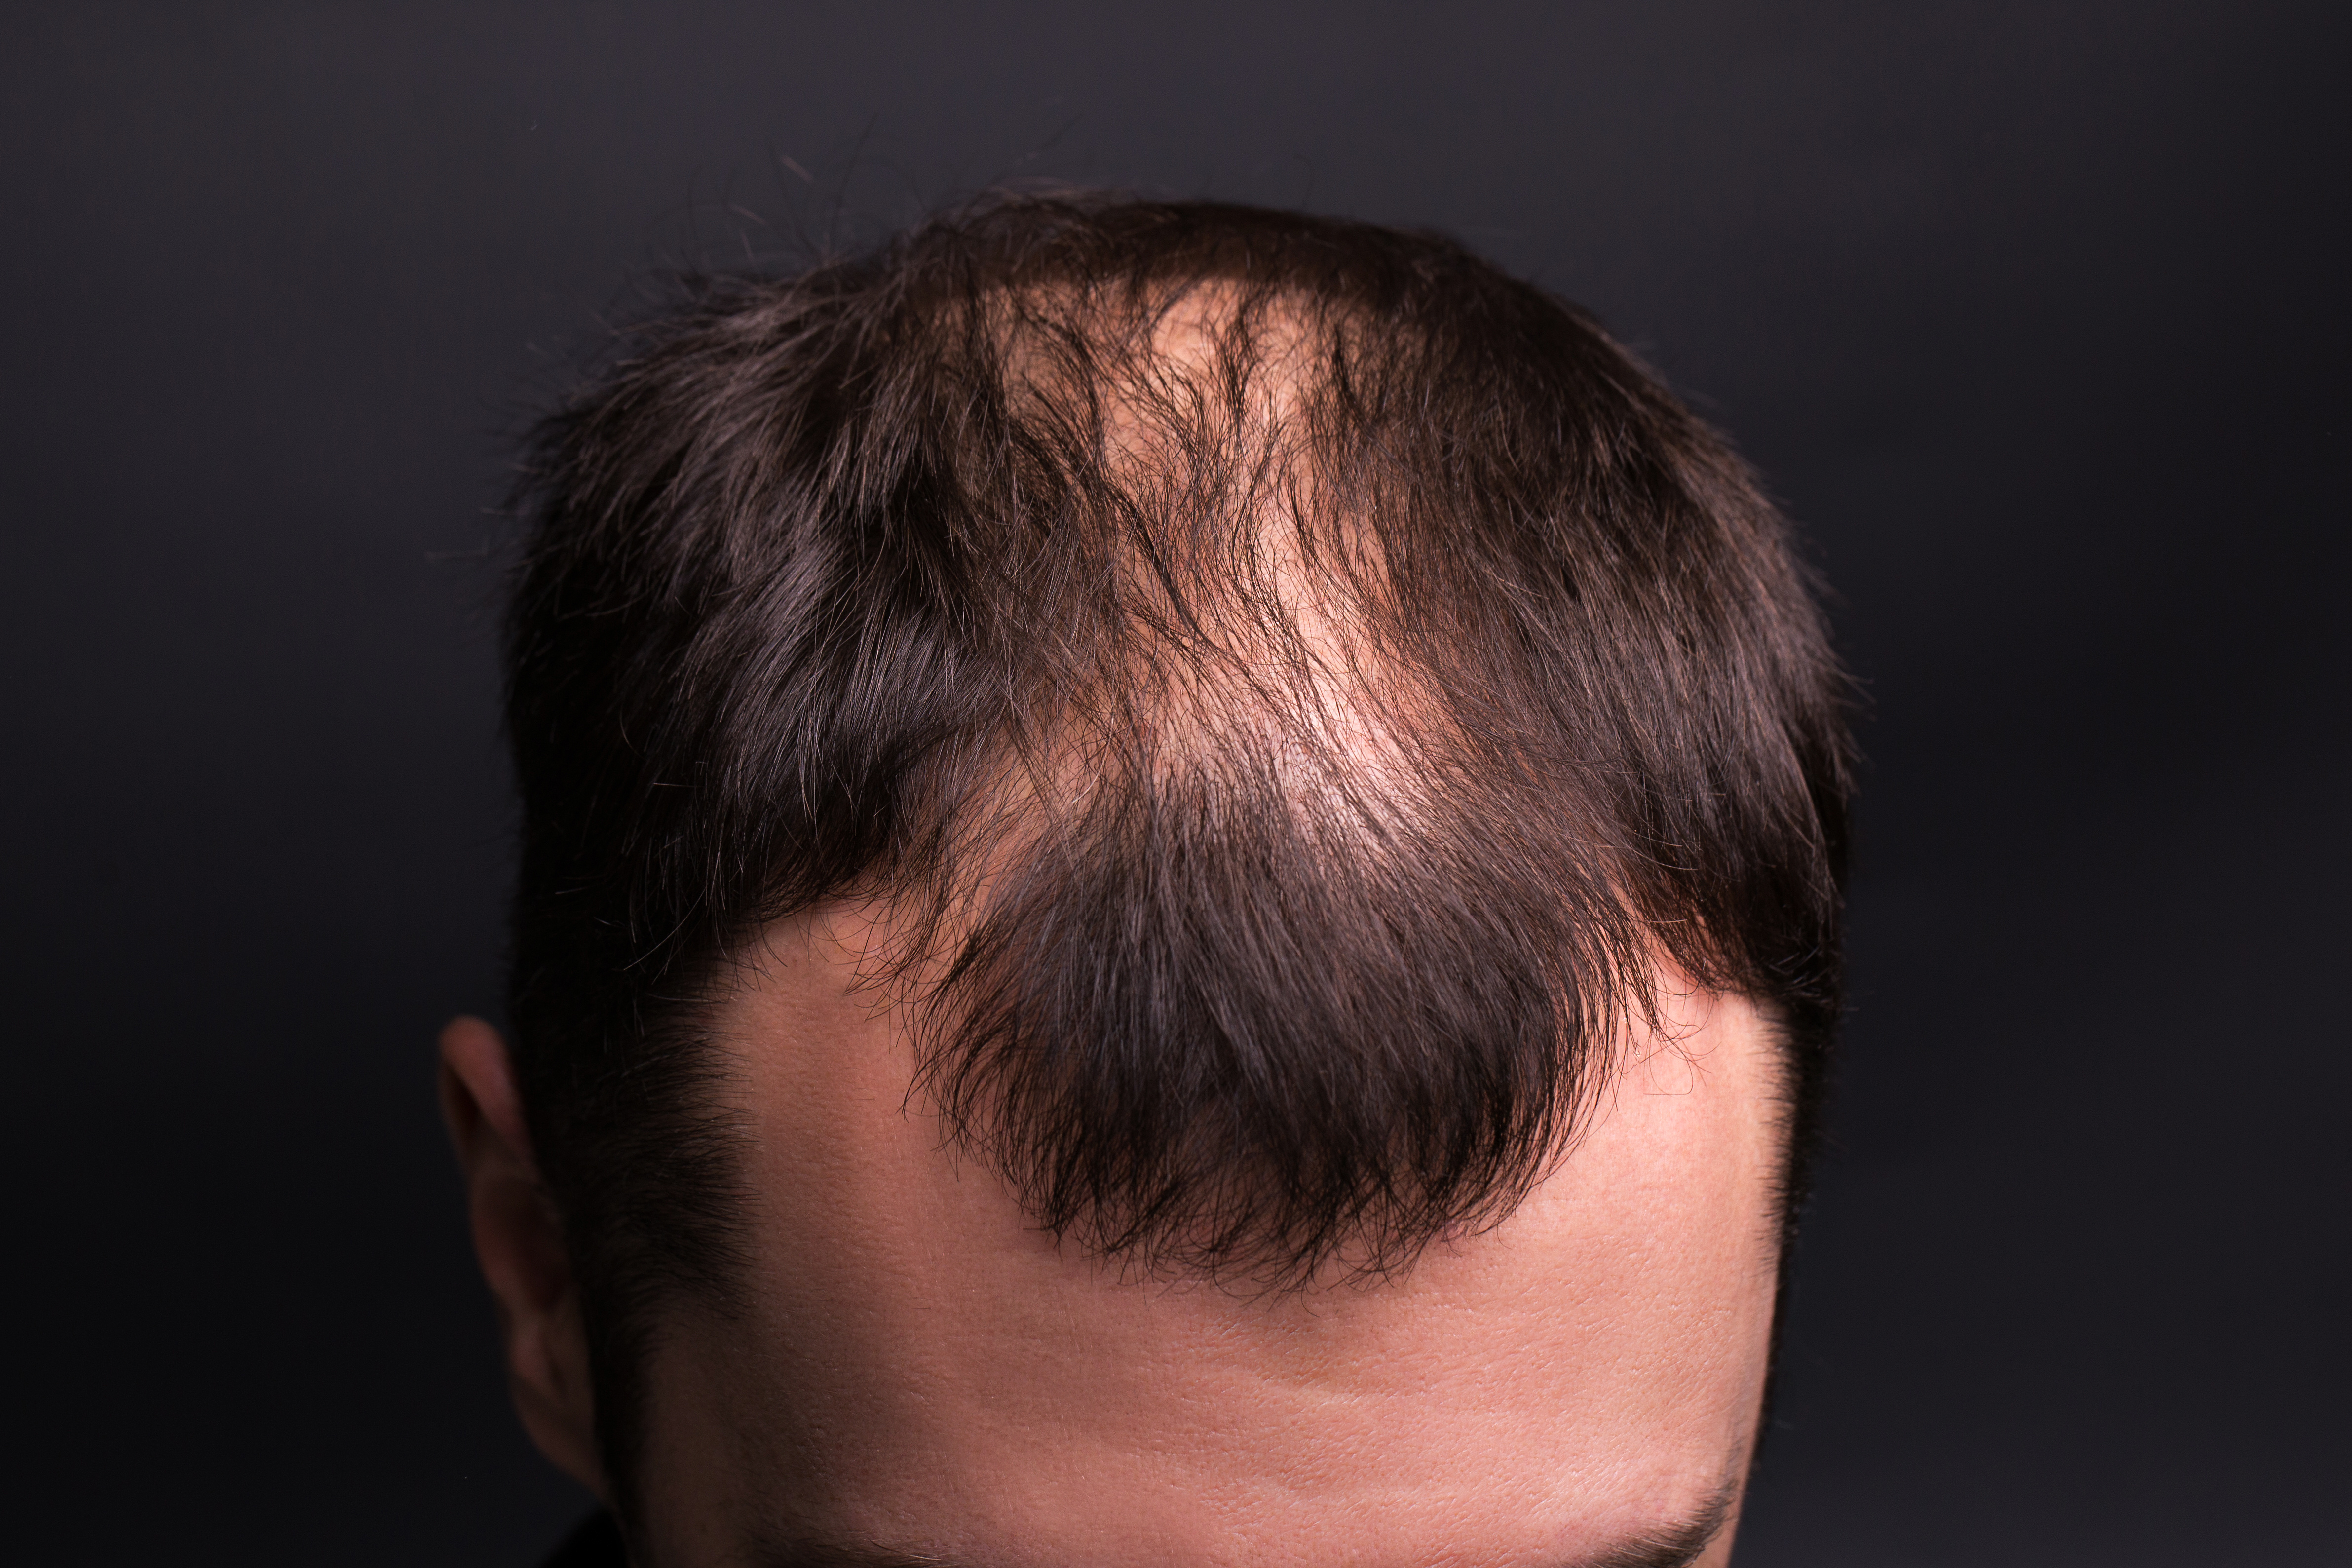 Balding Men's Hair Loss Treatment In Honolulu & New York